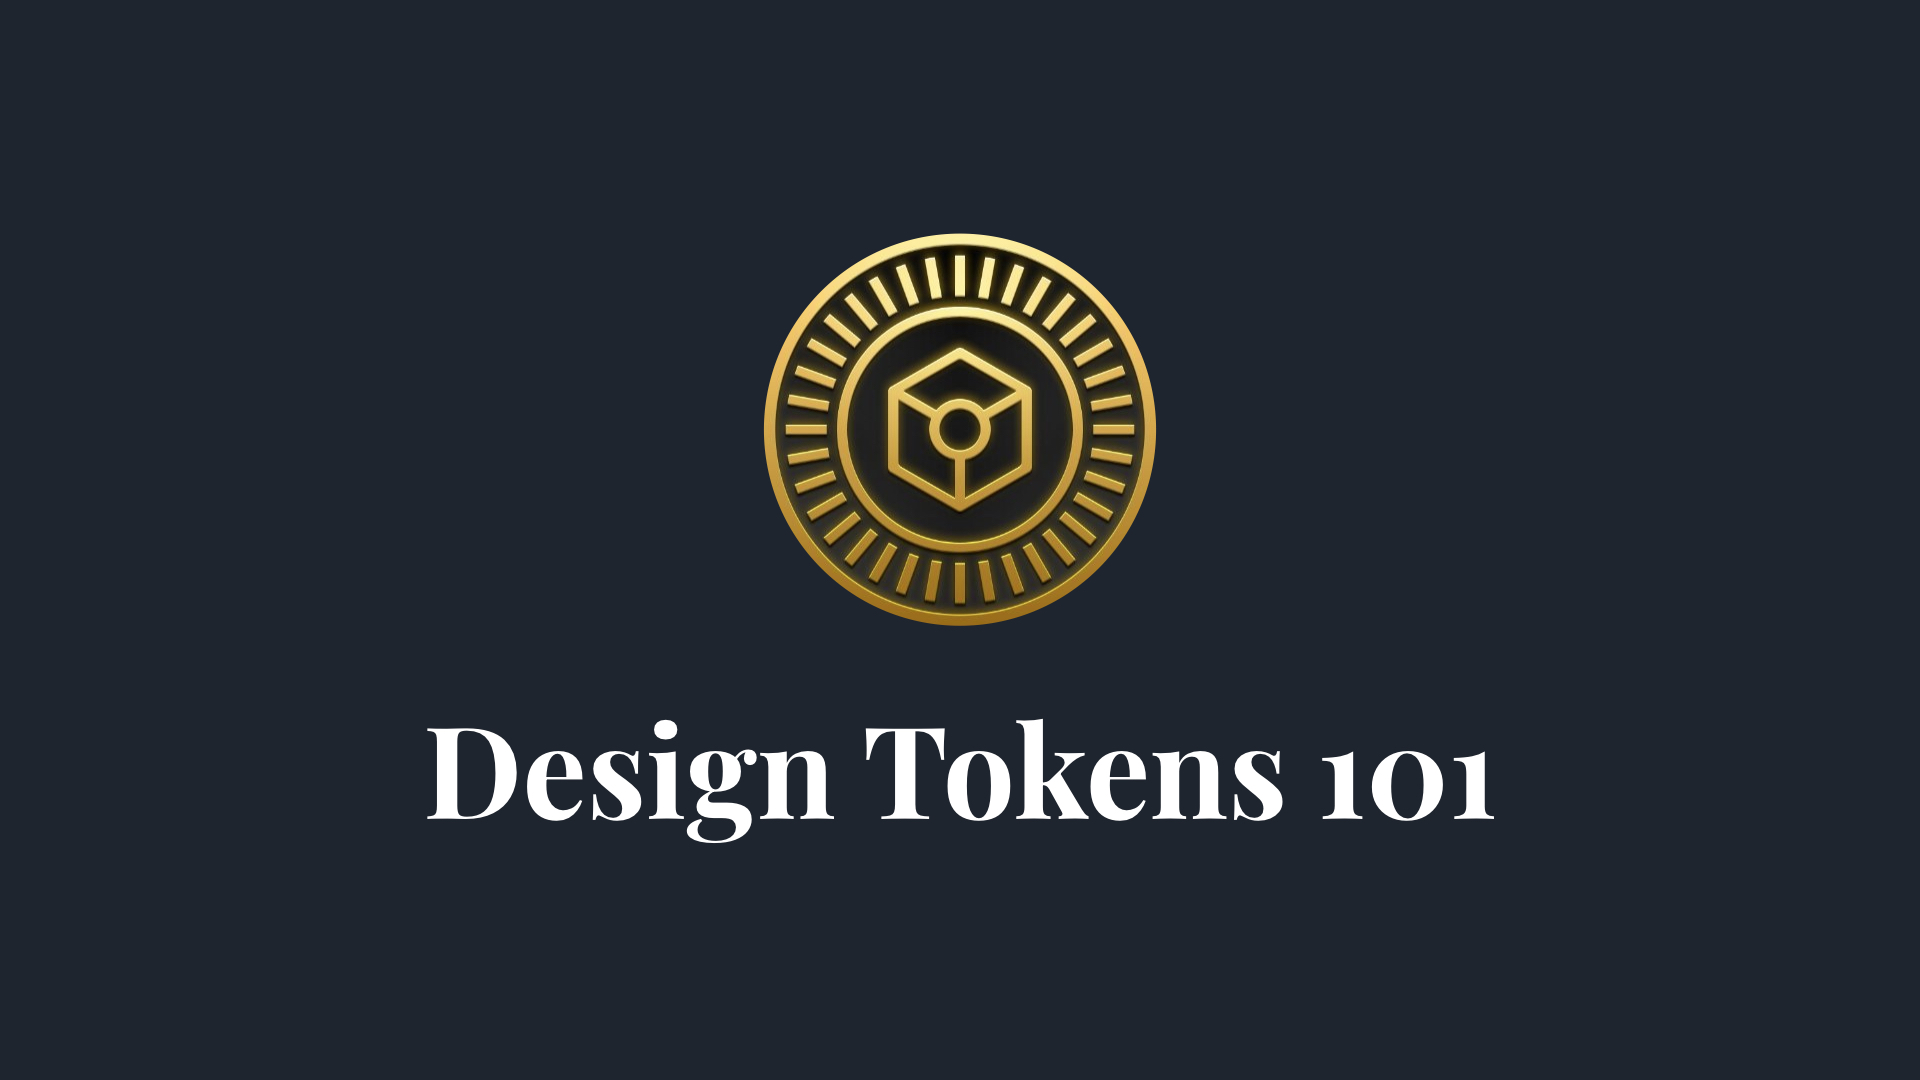 Standardising design tokens